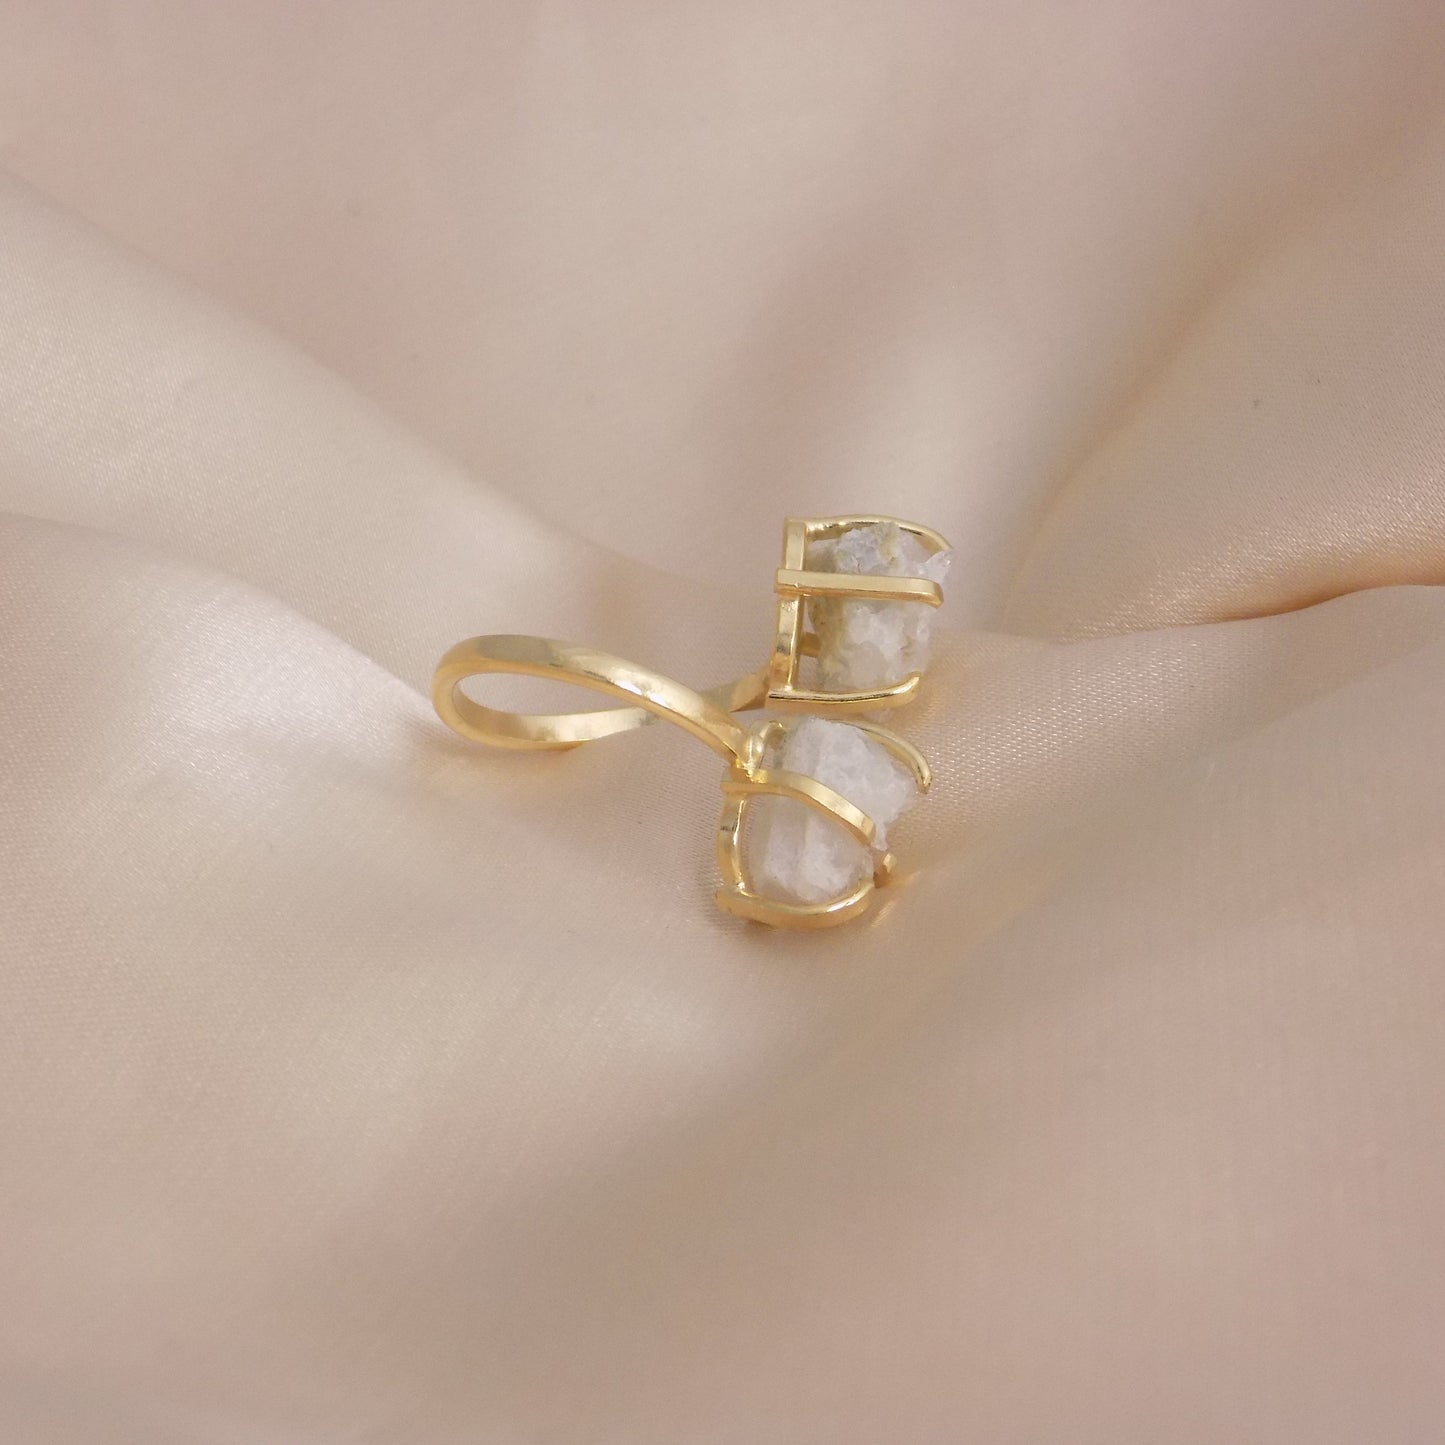 Natural White Crystal Quartz Ring, Minimalist Druzy Gemstone Ring Adjustable Band Gold Plated, G15-209